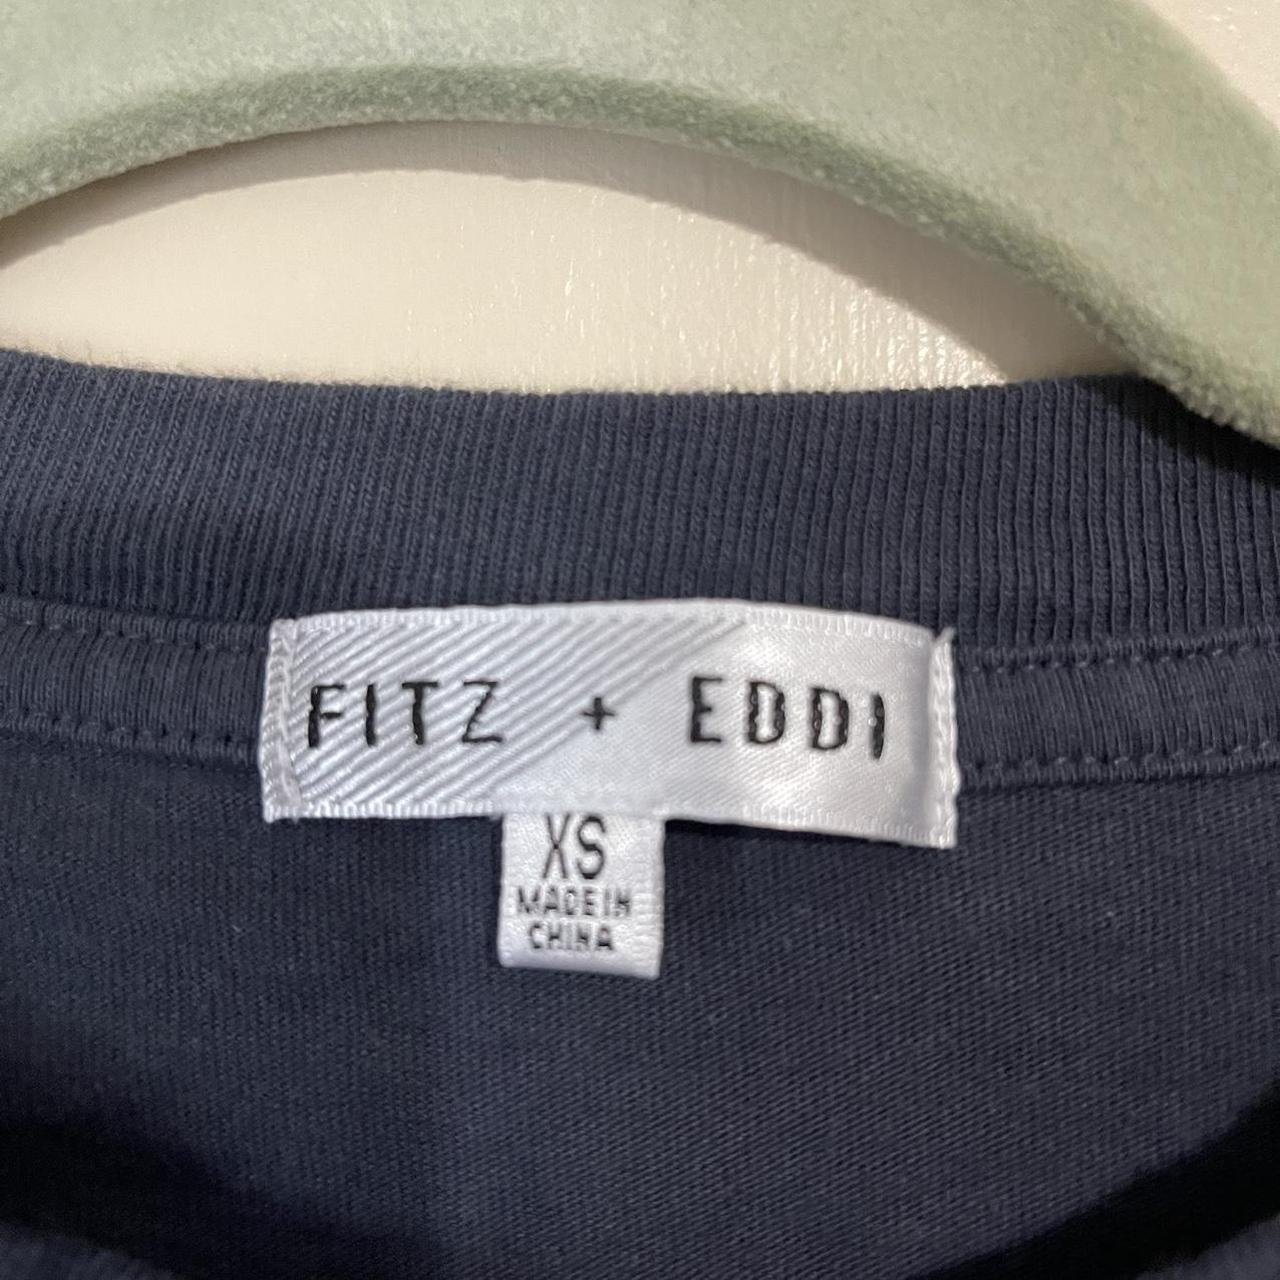 Fitz & Eddi color block top, striped, 100% cotton, - Depop